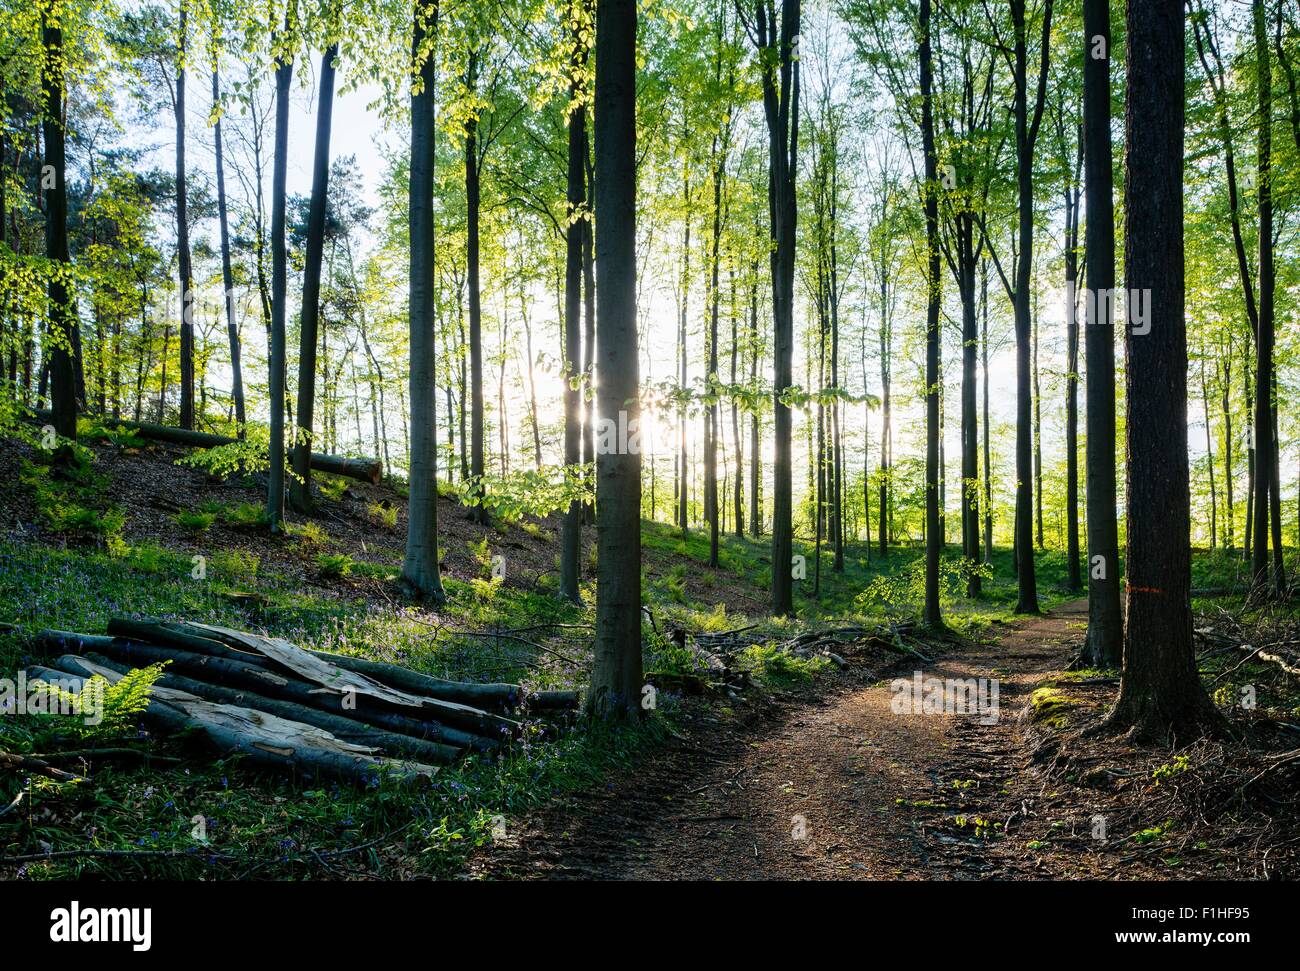 Hallerbos forest, Halle, Vlaams-Brabant, Belgium Stock Photo